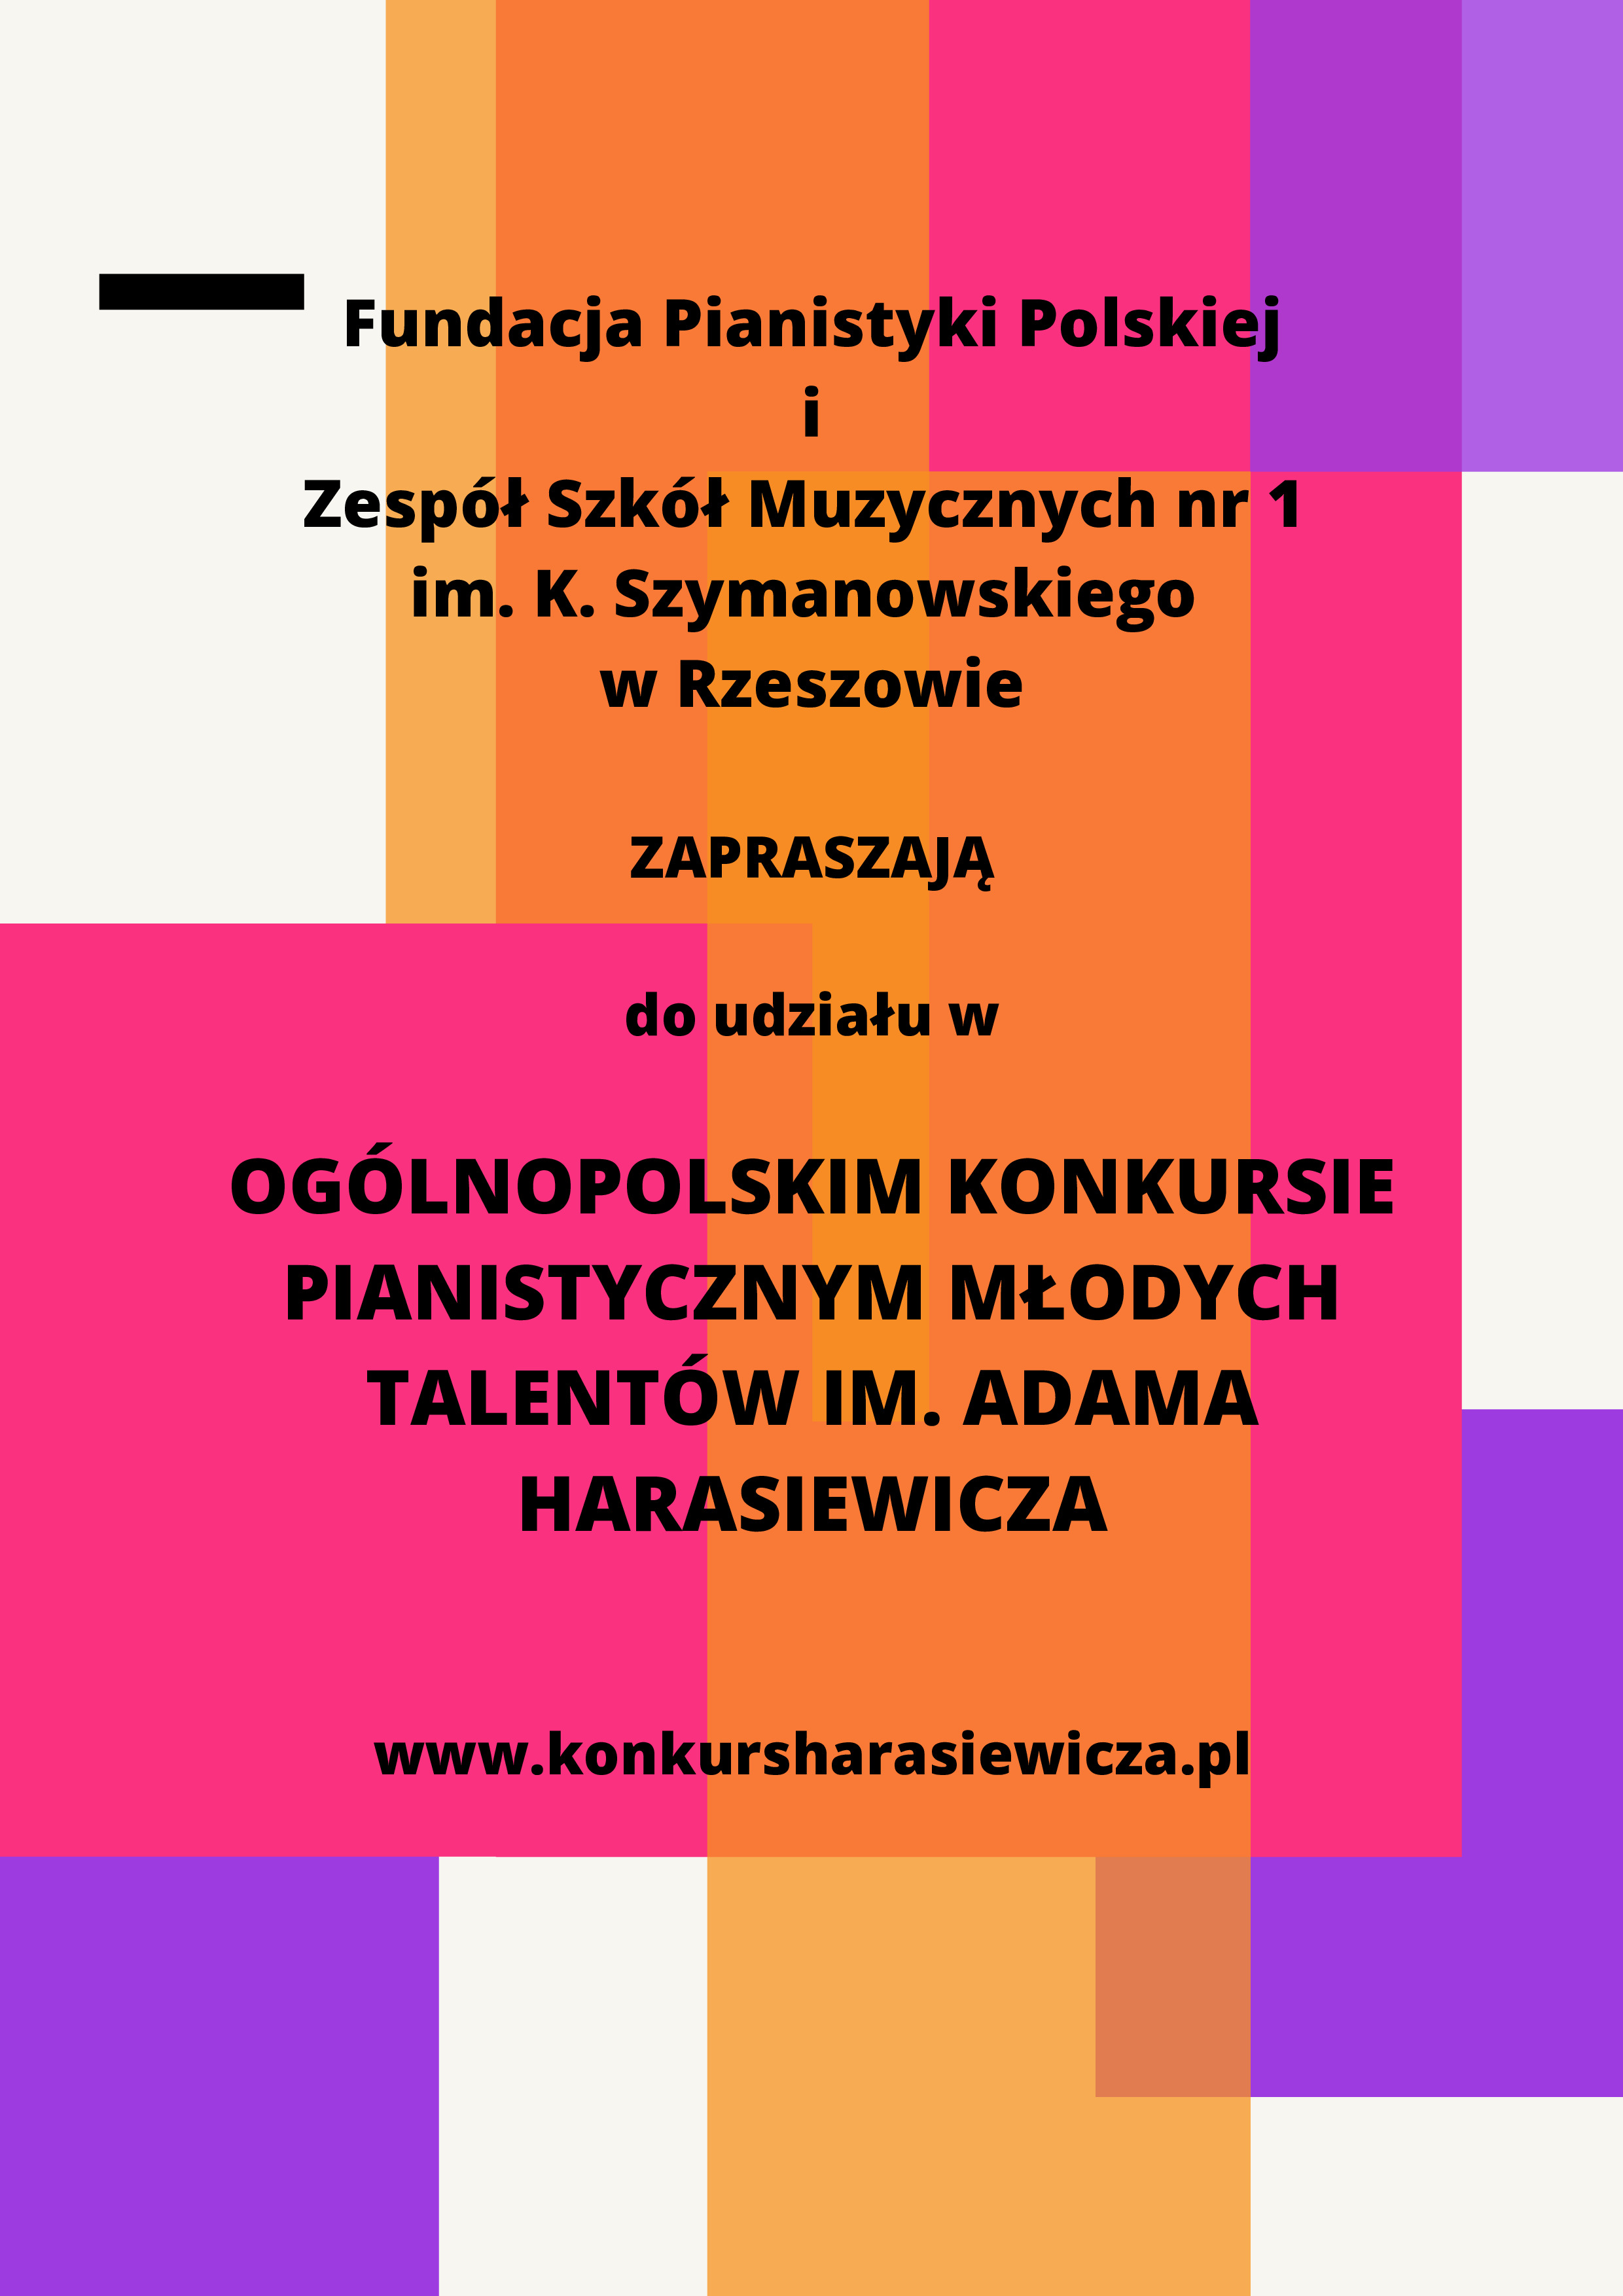 Harasiewicz 2020B